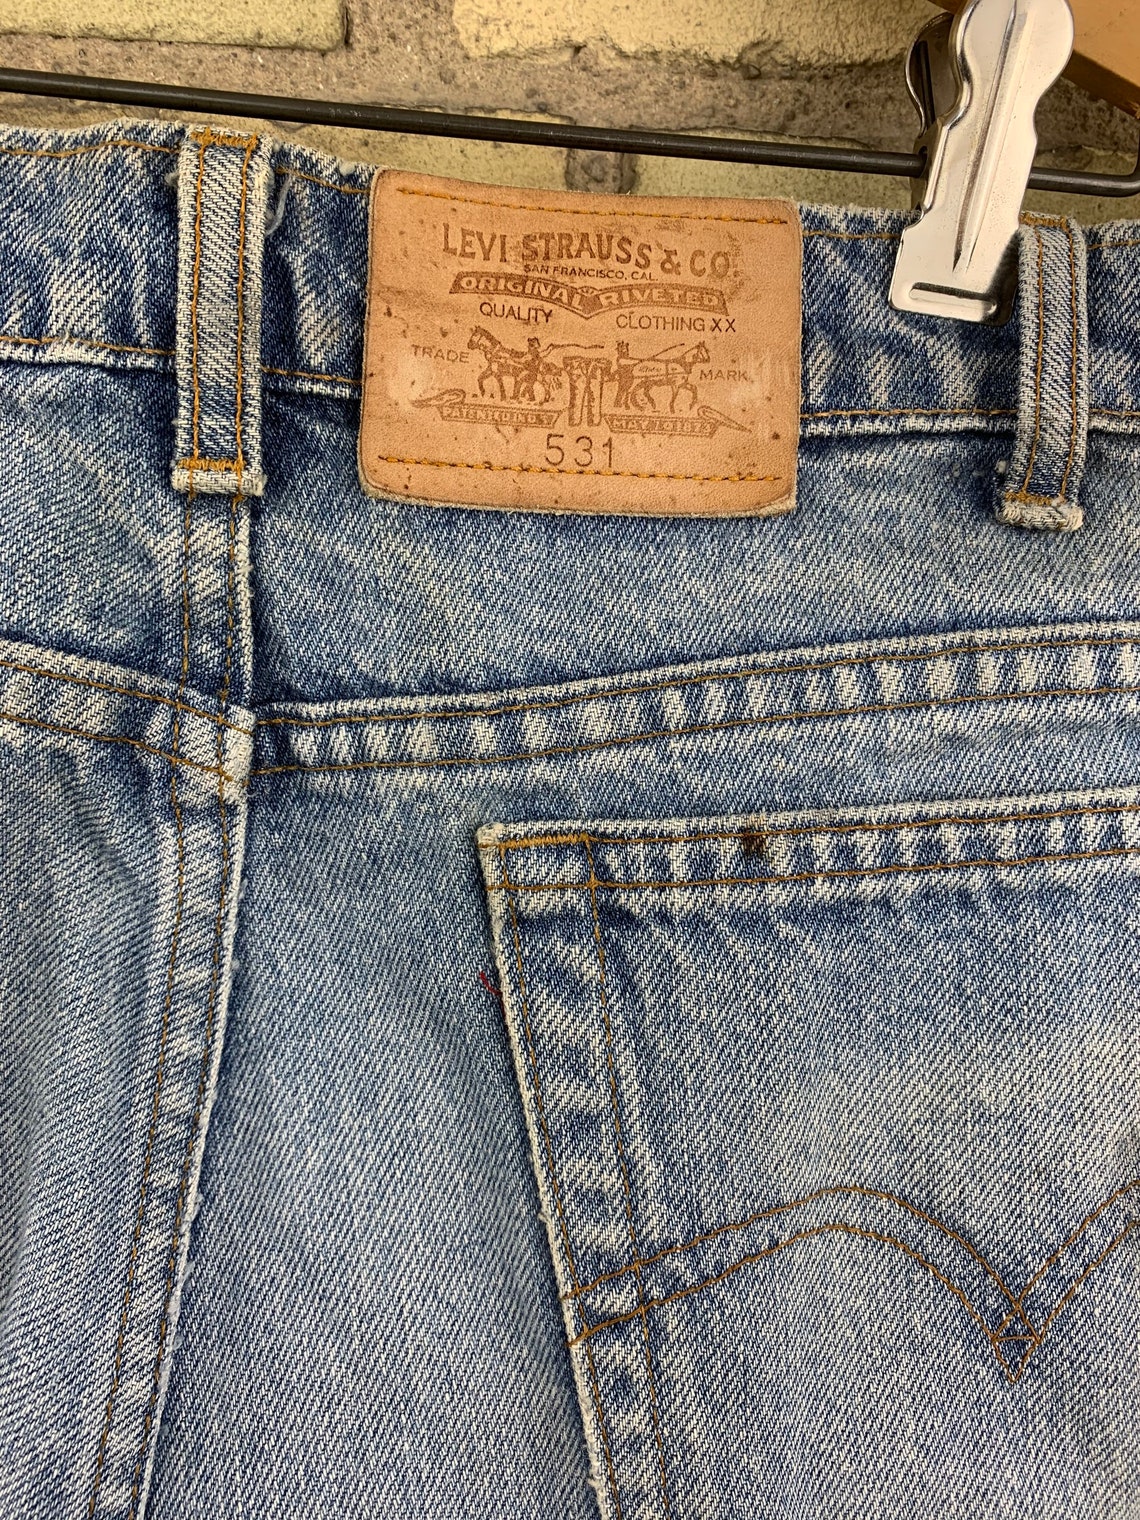 Vintage 1980s Levis 531 Light Wash Jeans | Etsy